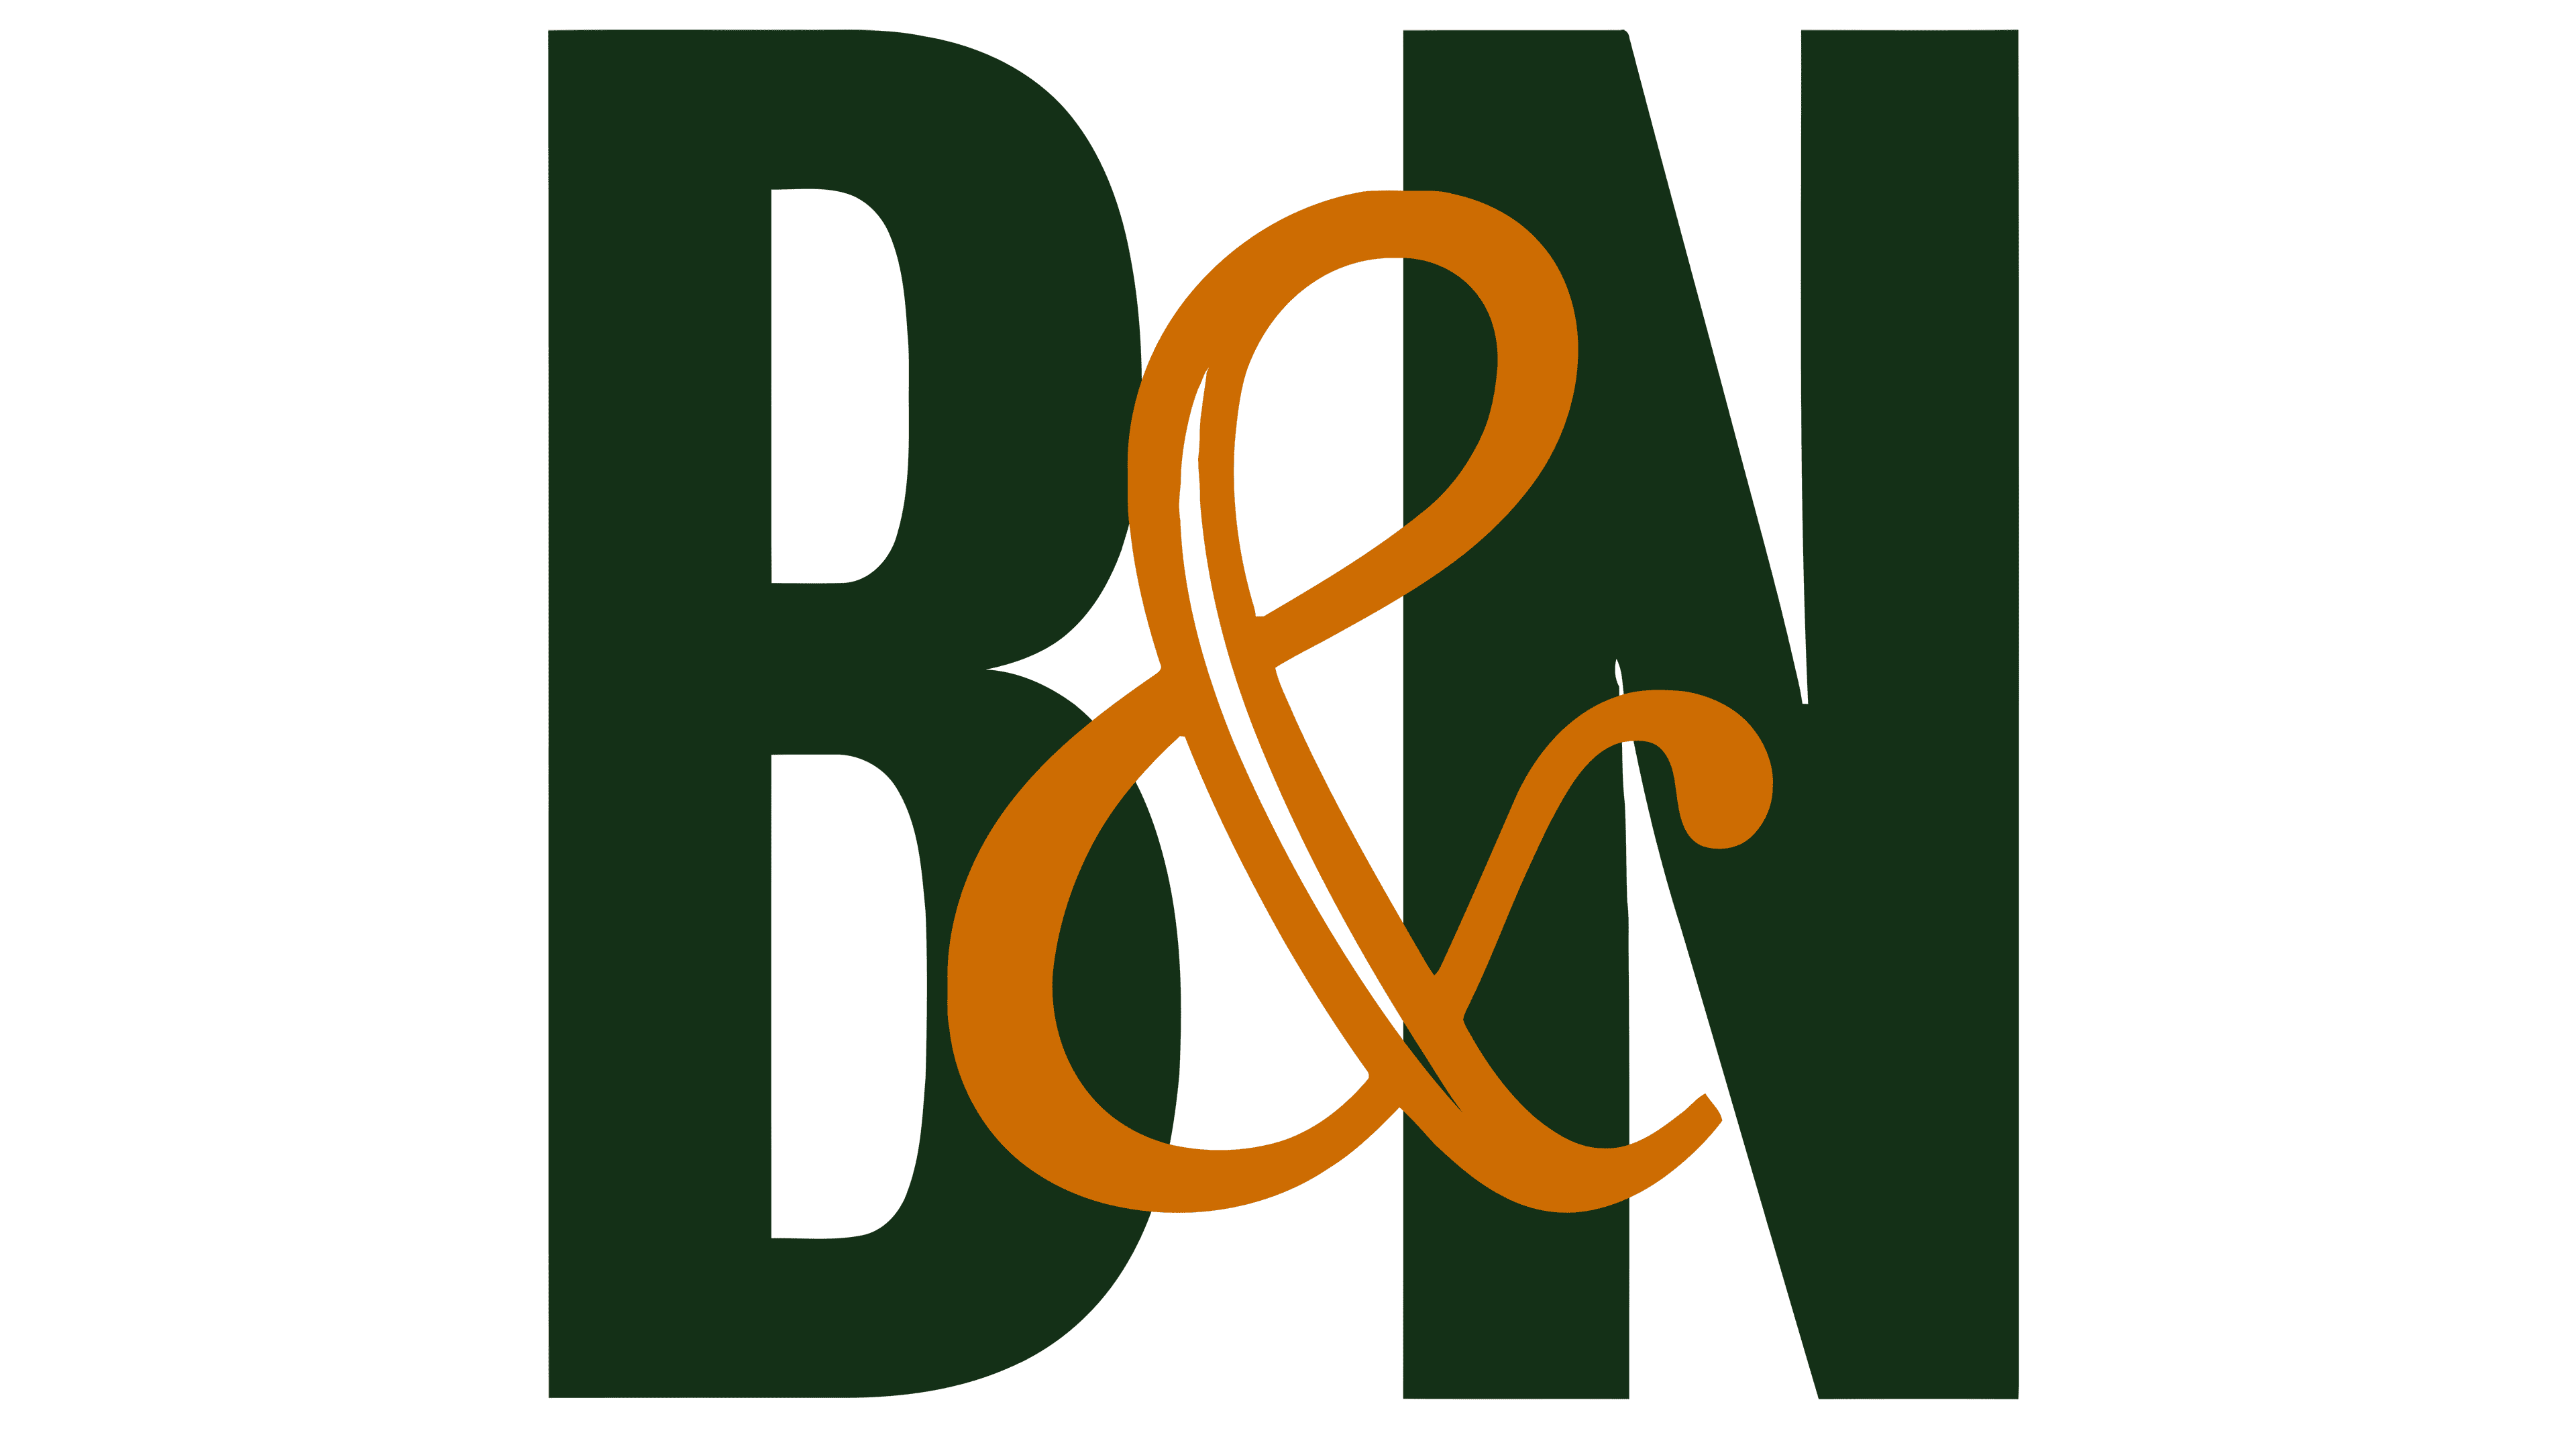 A green and orange logo for b & n.